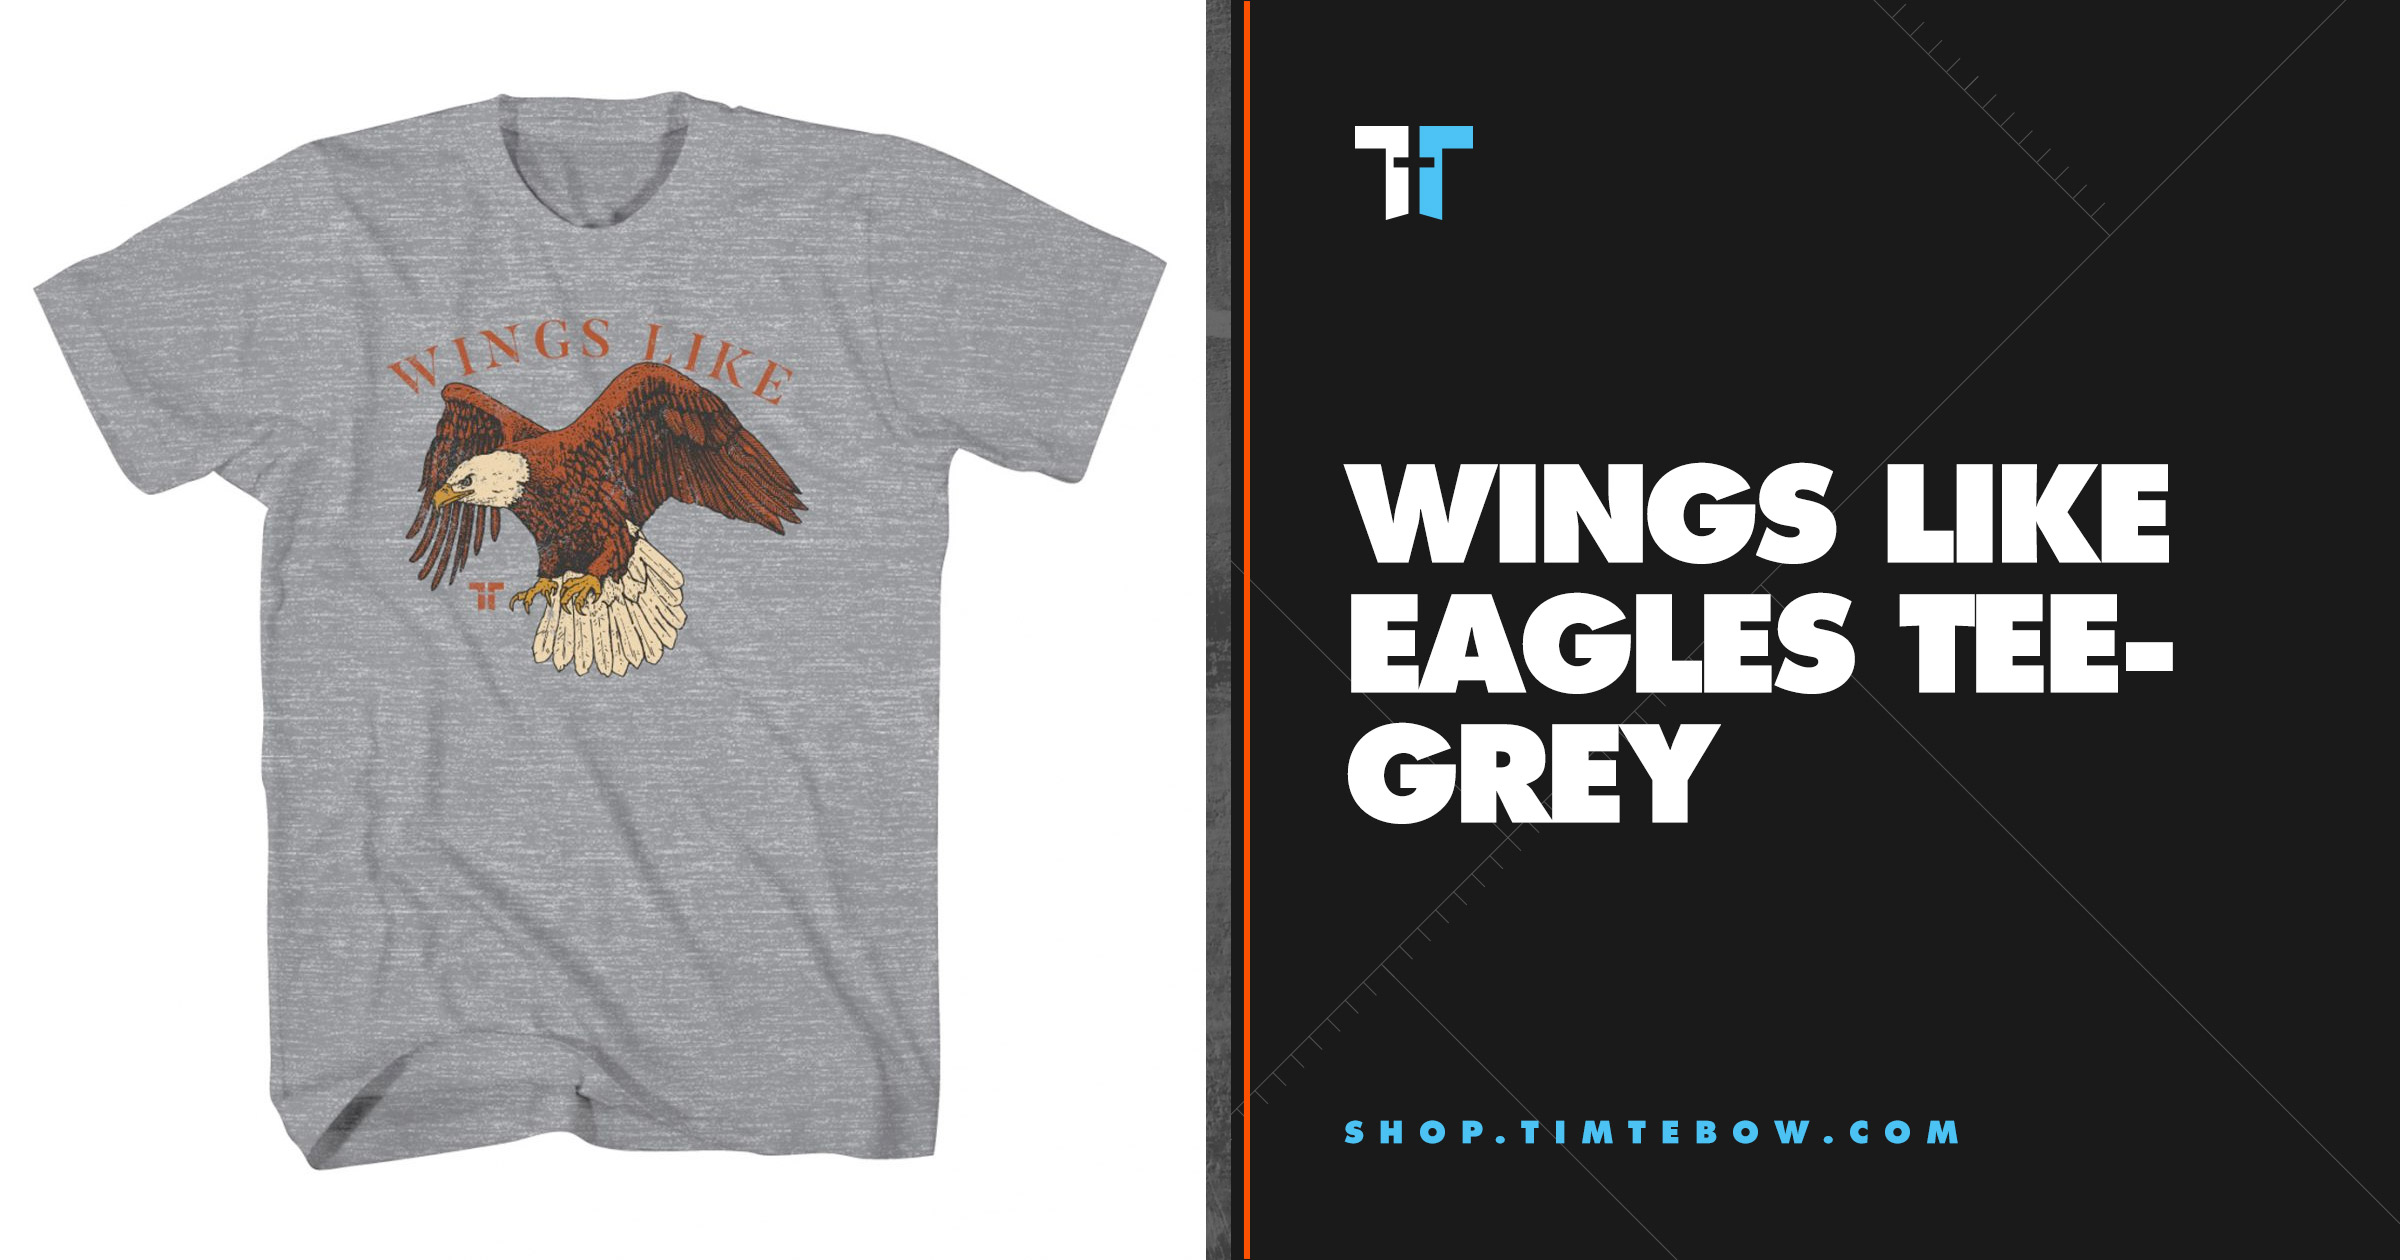 tebow eagles shirt